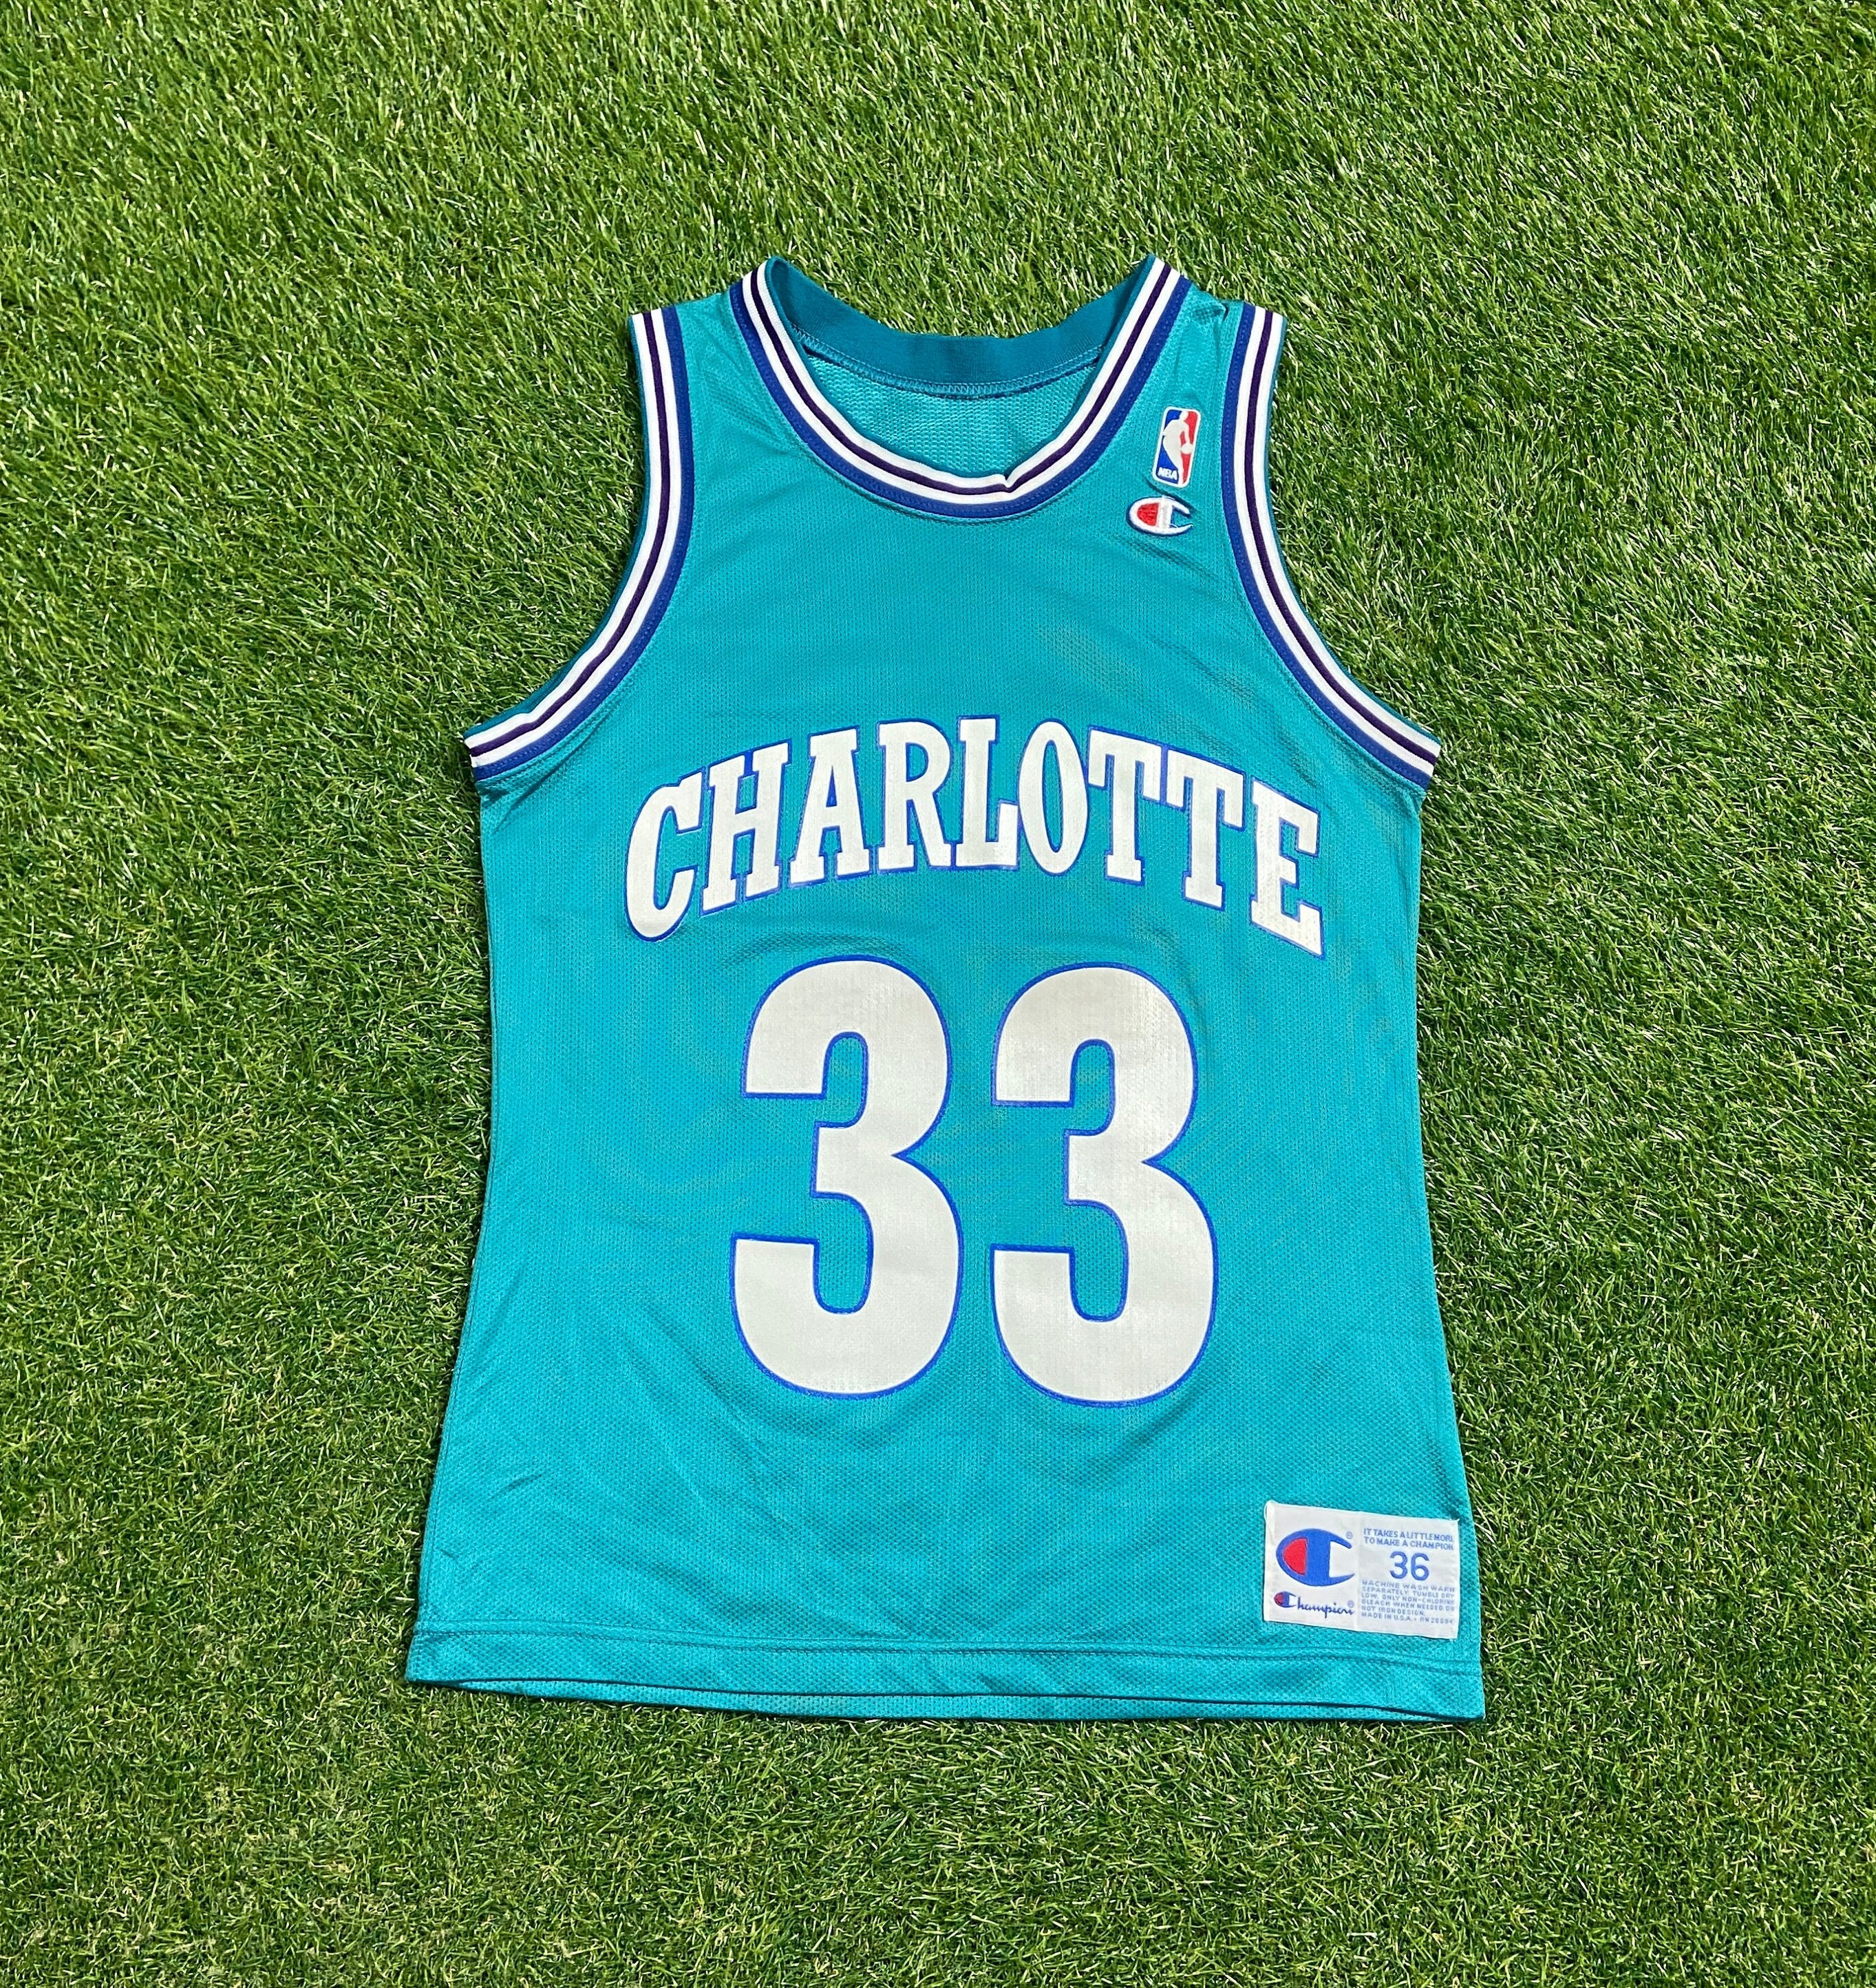 1990s Alonzo Mourning Charlotte Hornets Basketball Jersey